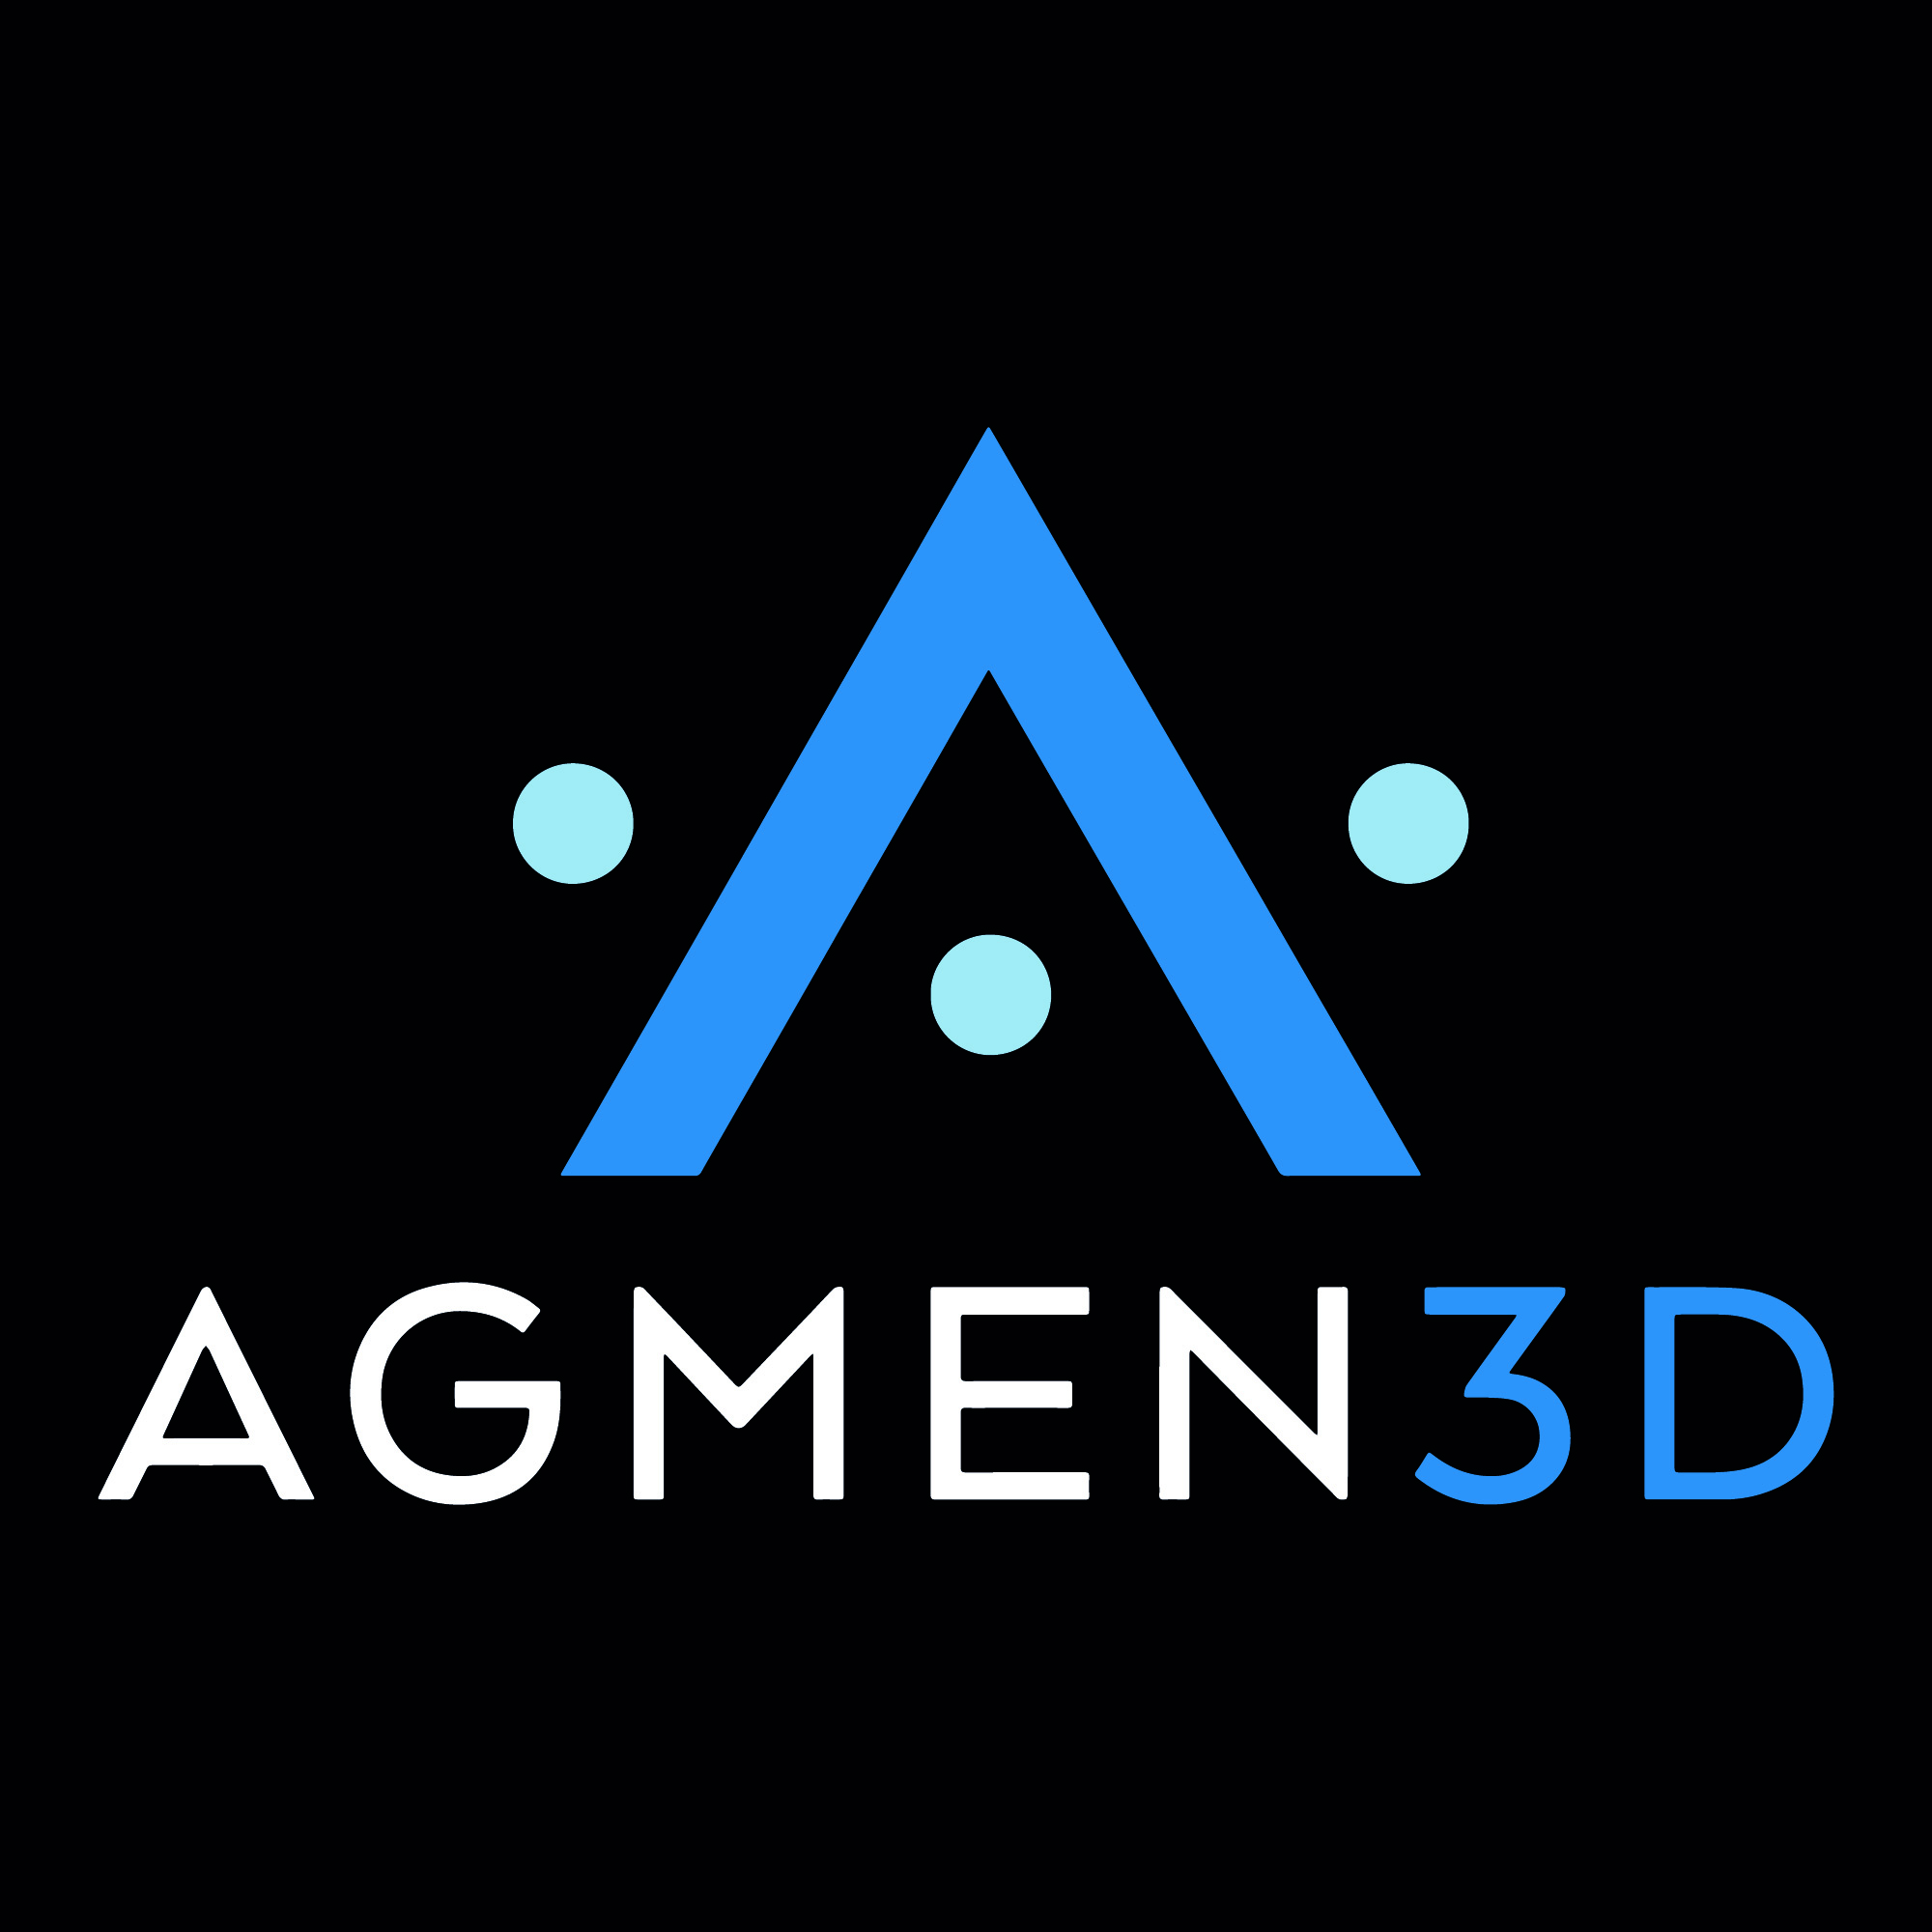 Agmen 3D